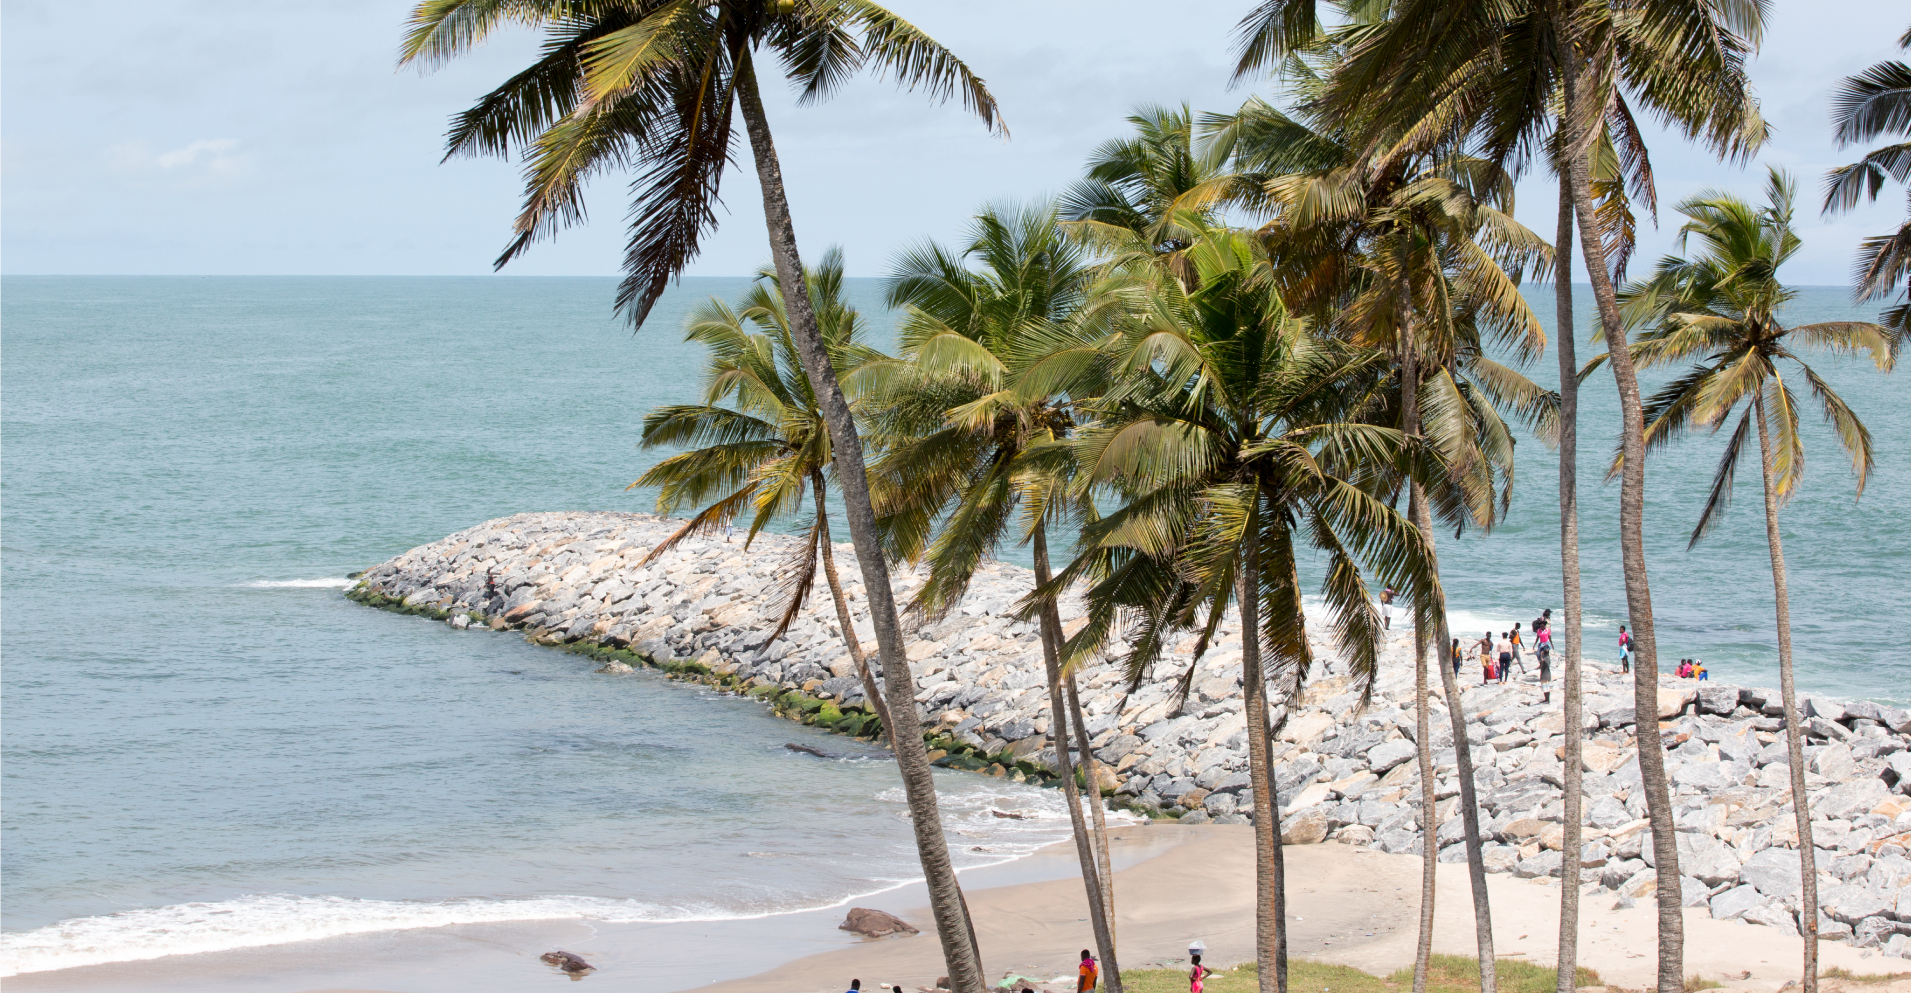 Palm trees lining the coast of a beach